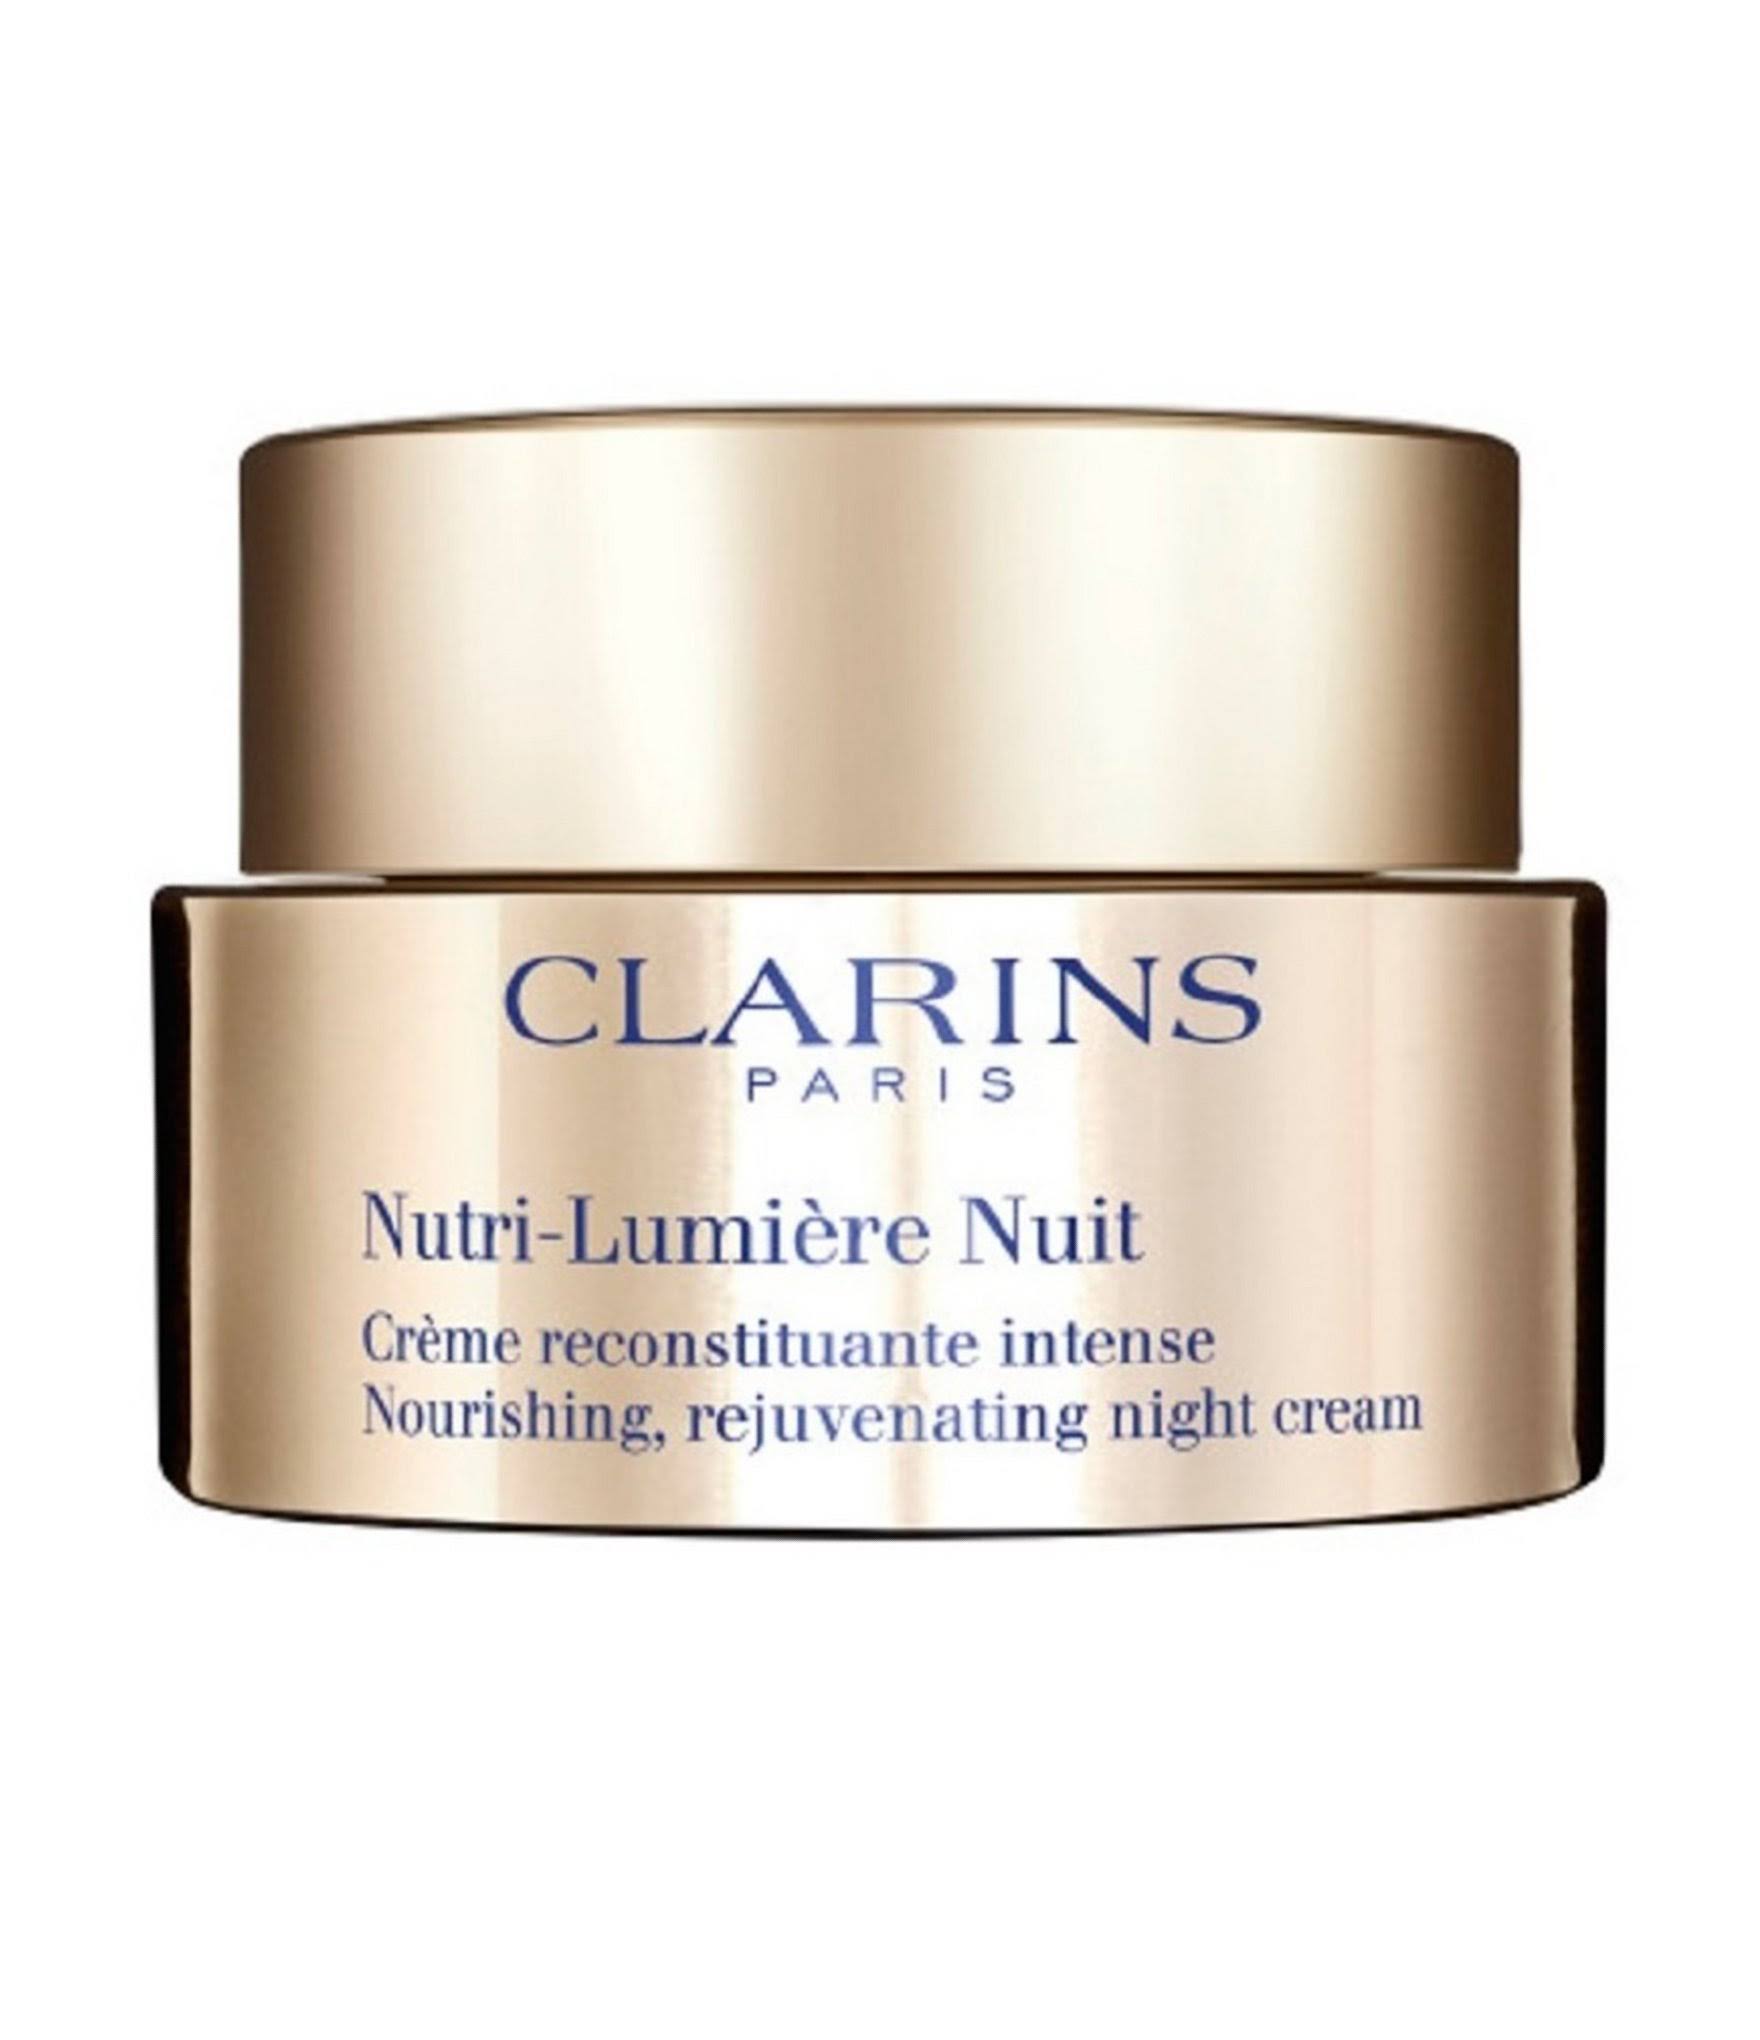 Clarins Nutri-Lumiere Night Cream 1.6 oz.